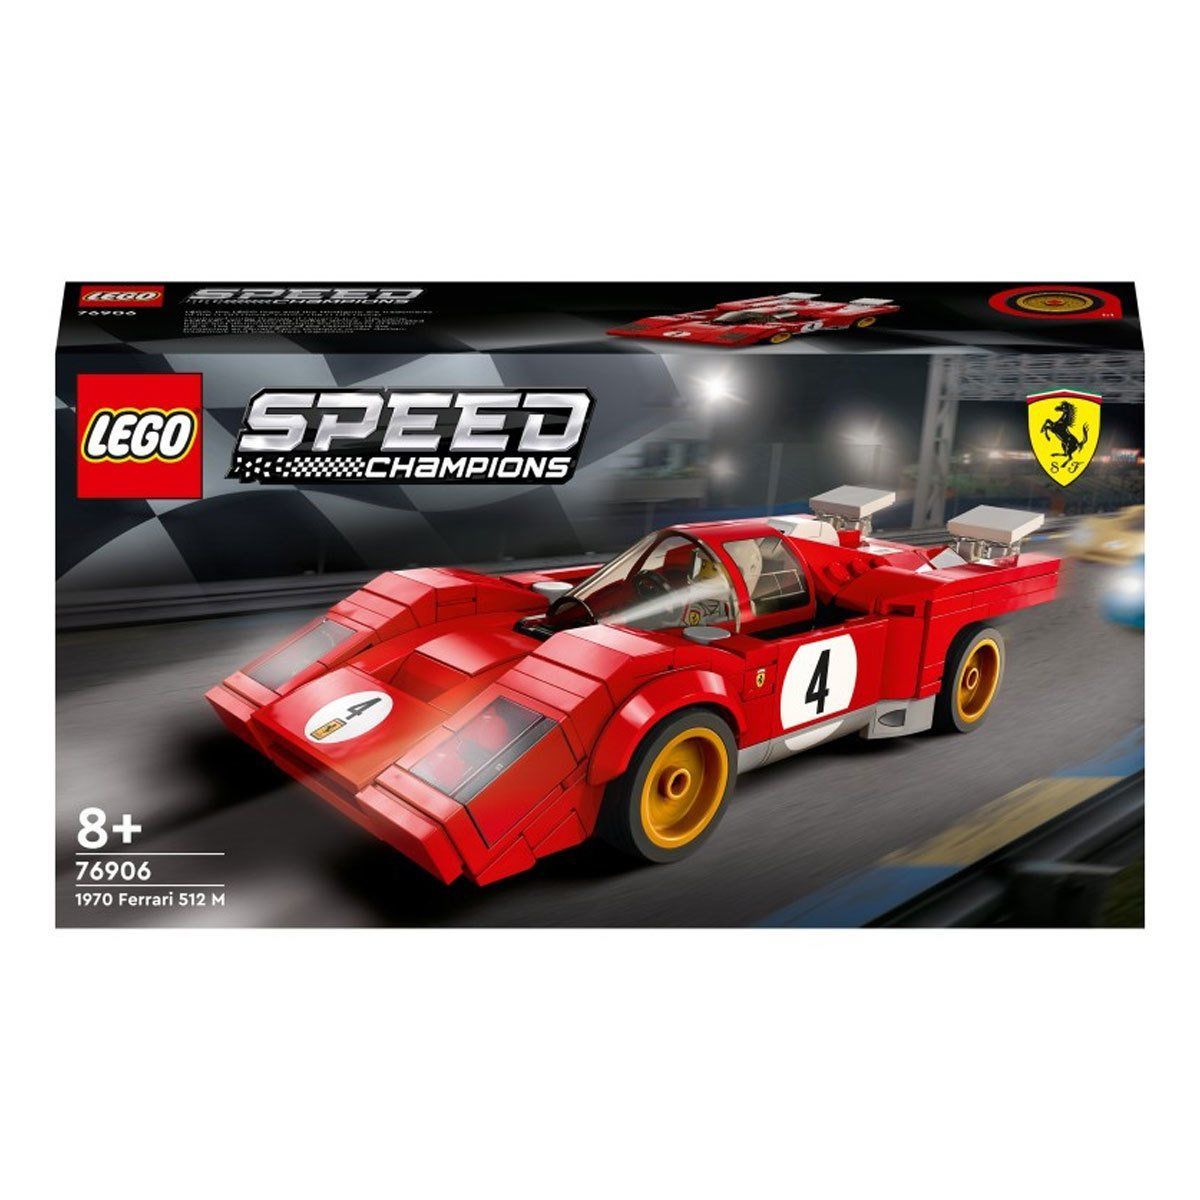 76906 Lego Speed Champions - 1970 Ferrari 512M, 291 parça +8 yaş